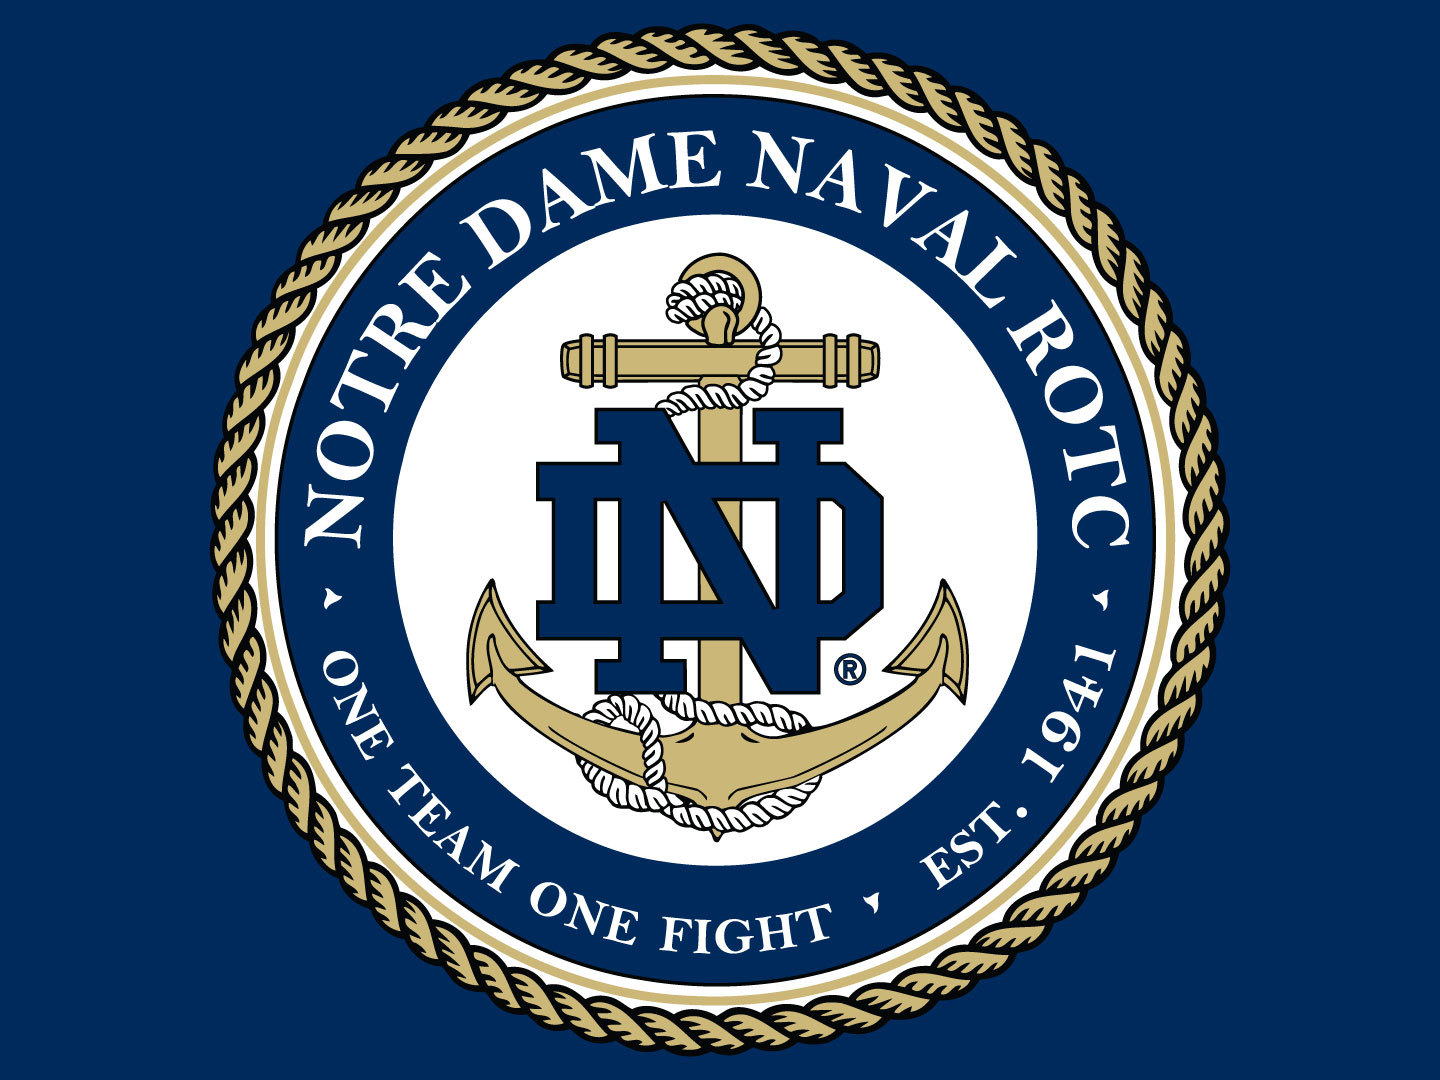 Notre Dame Naval ROTC